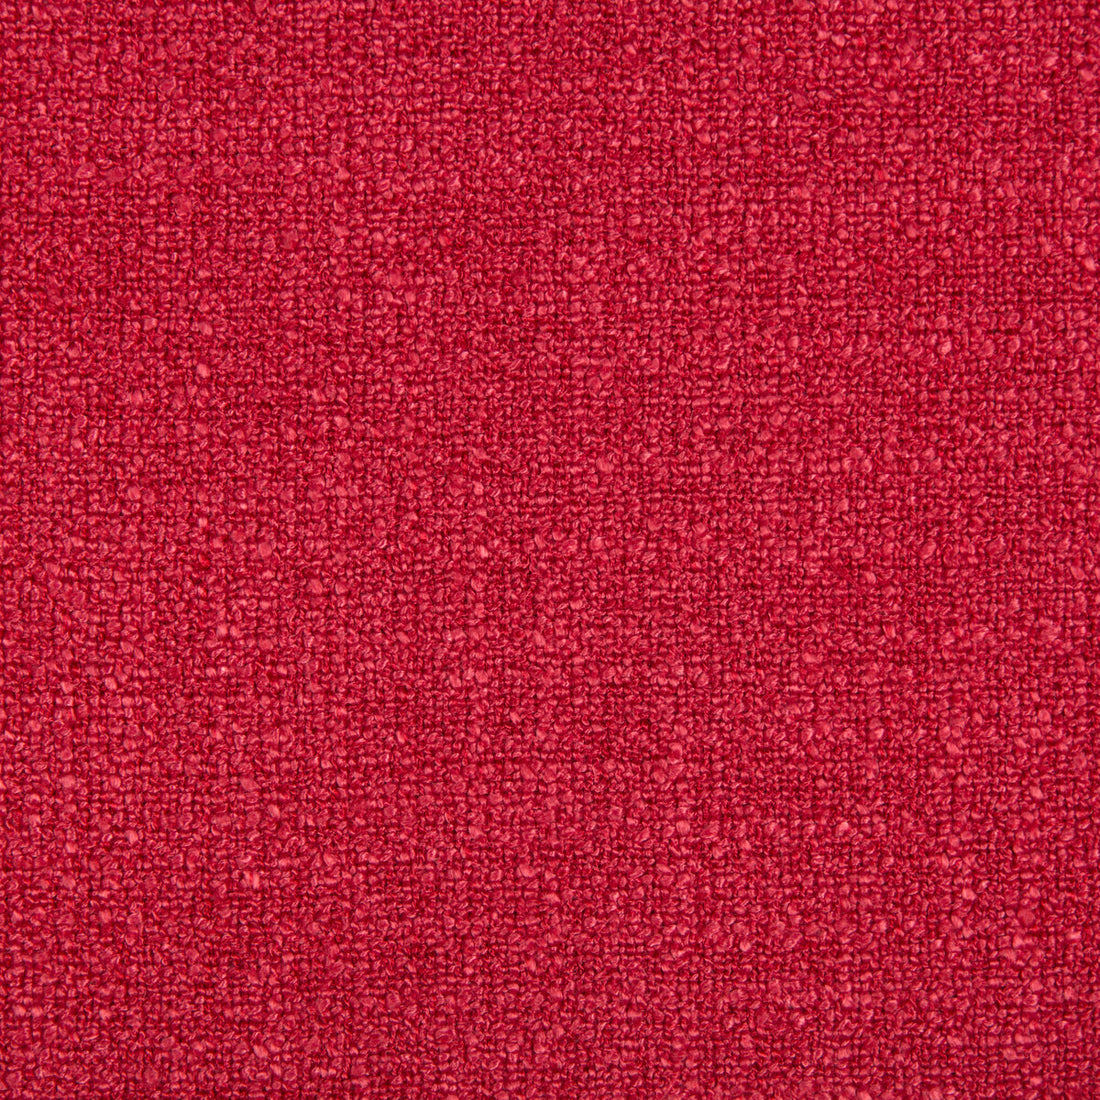 Kravet Smart fabric in 35147-97 color - pattern 35147.97.0 - by Kravet Smart